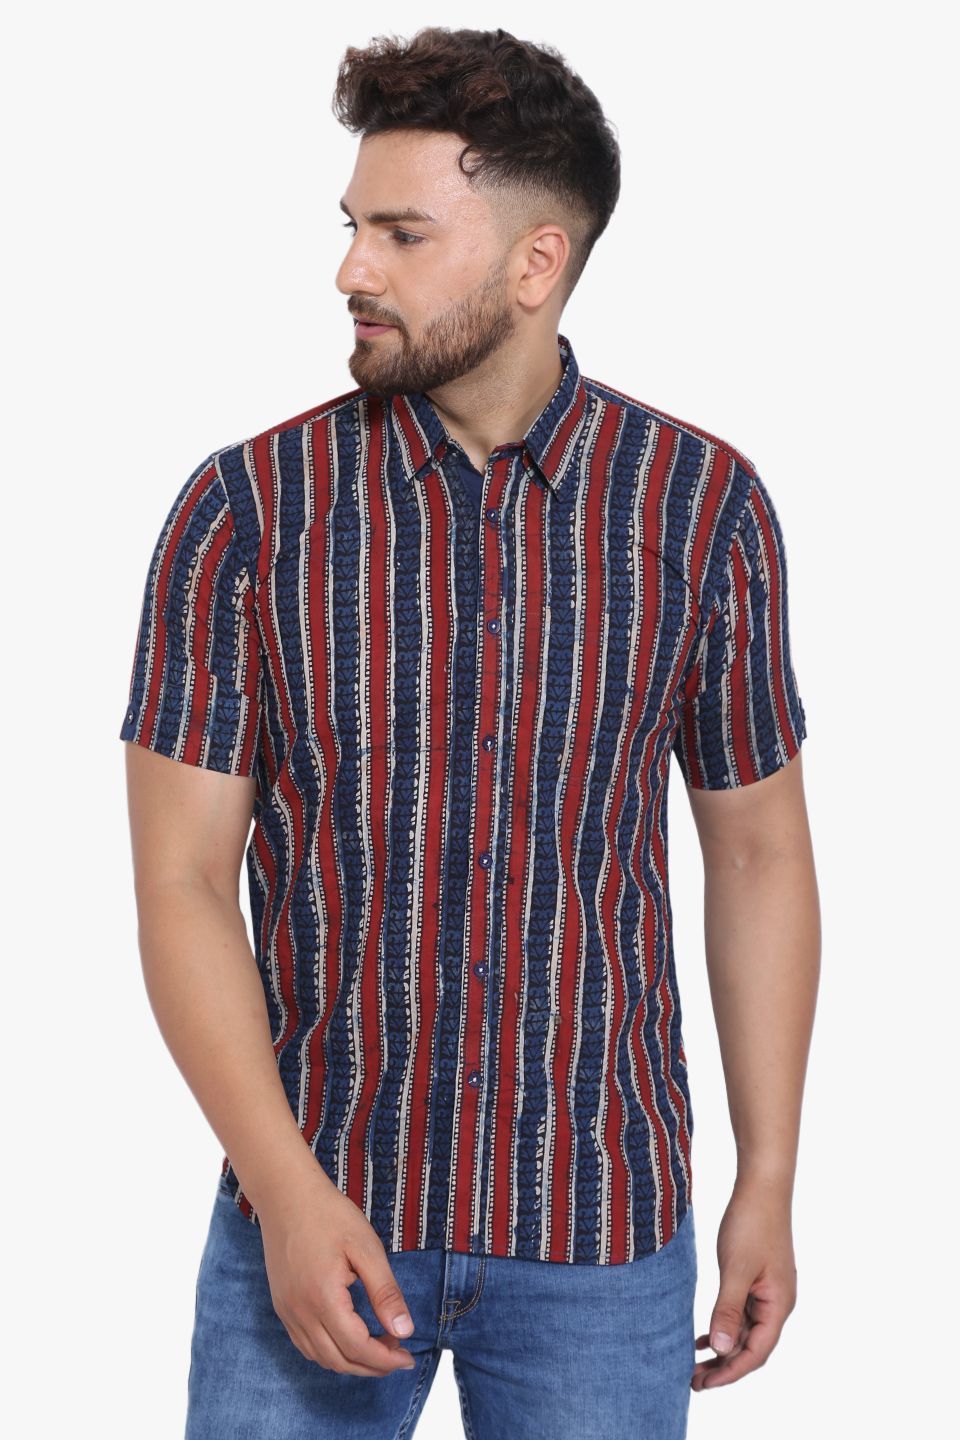 Jaipur 100% Cotton Multicolored Striped Shirt